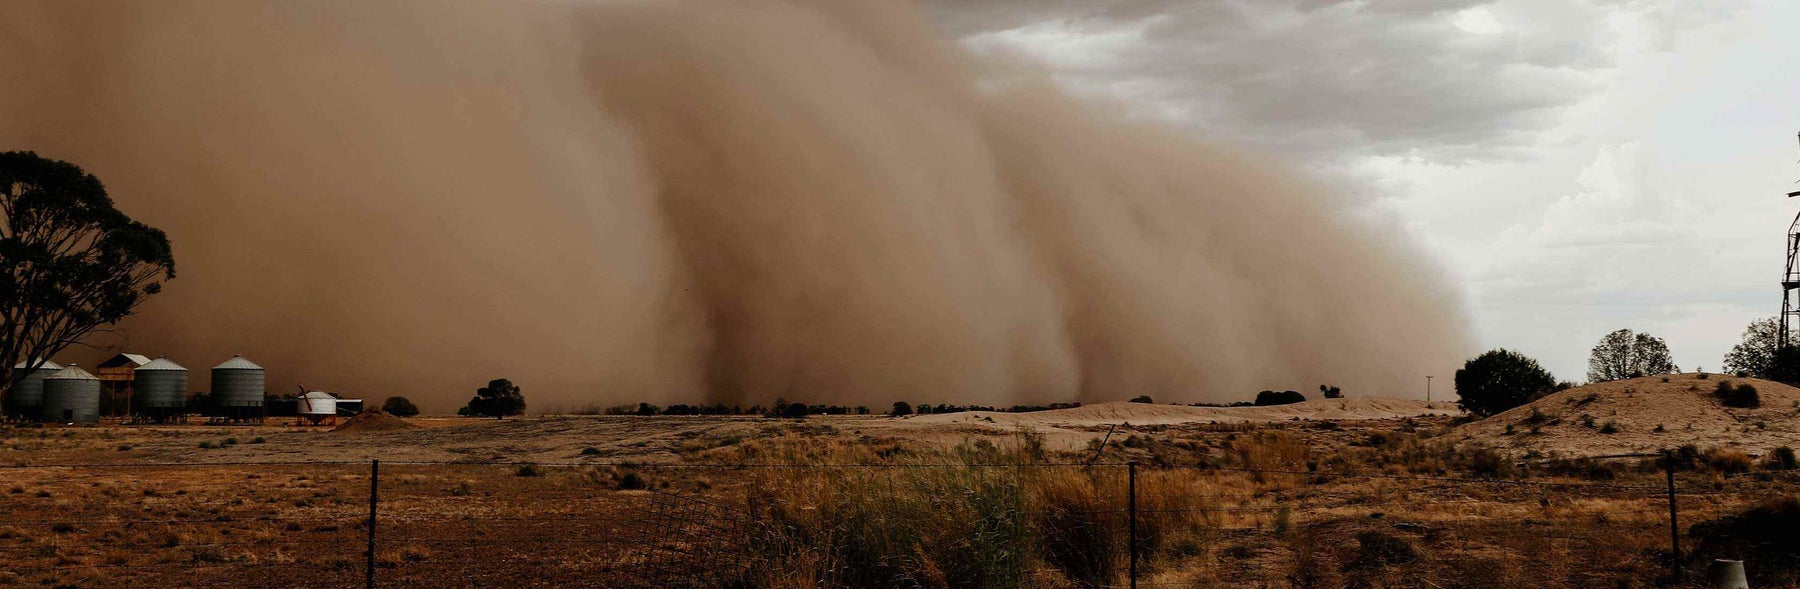 Dust storm in drought-stricken NSW